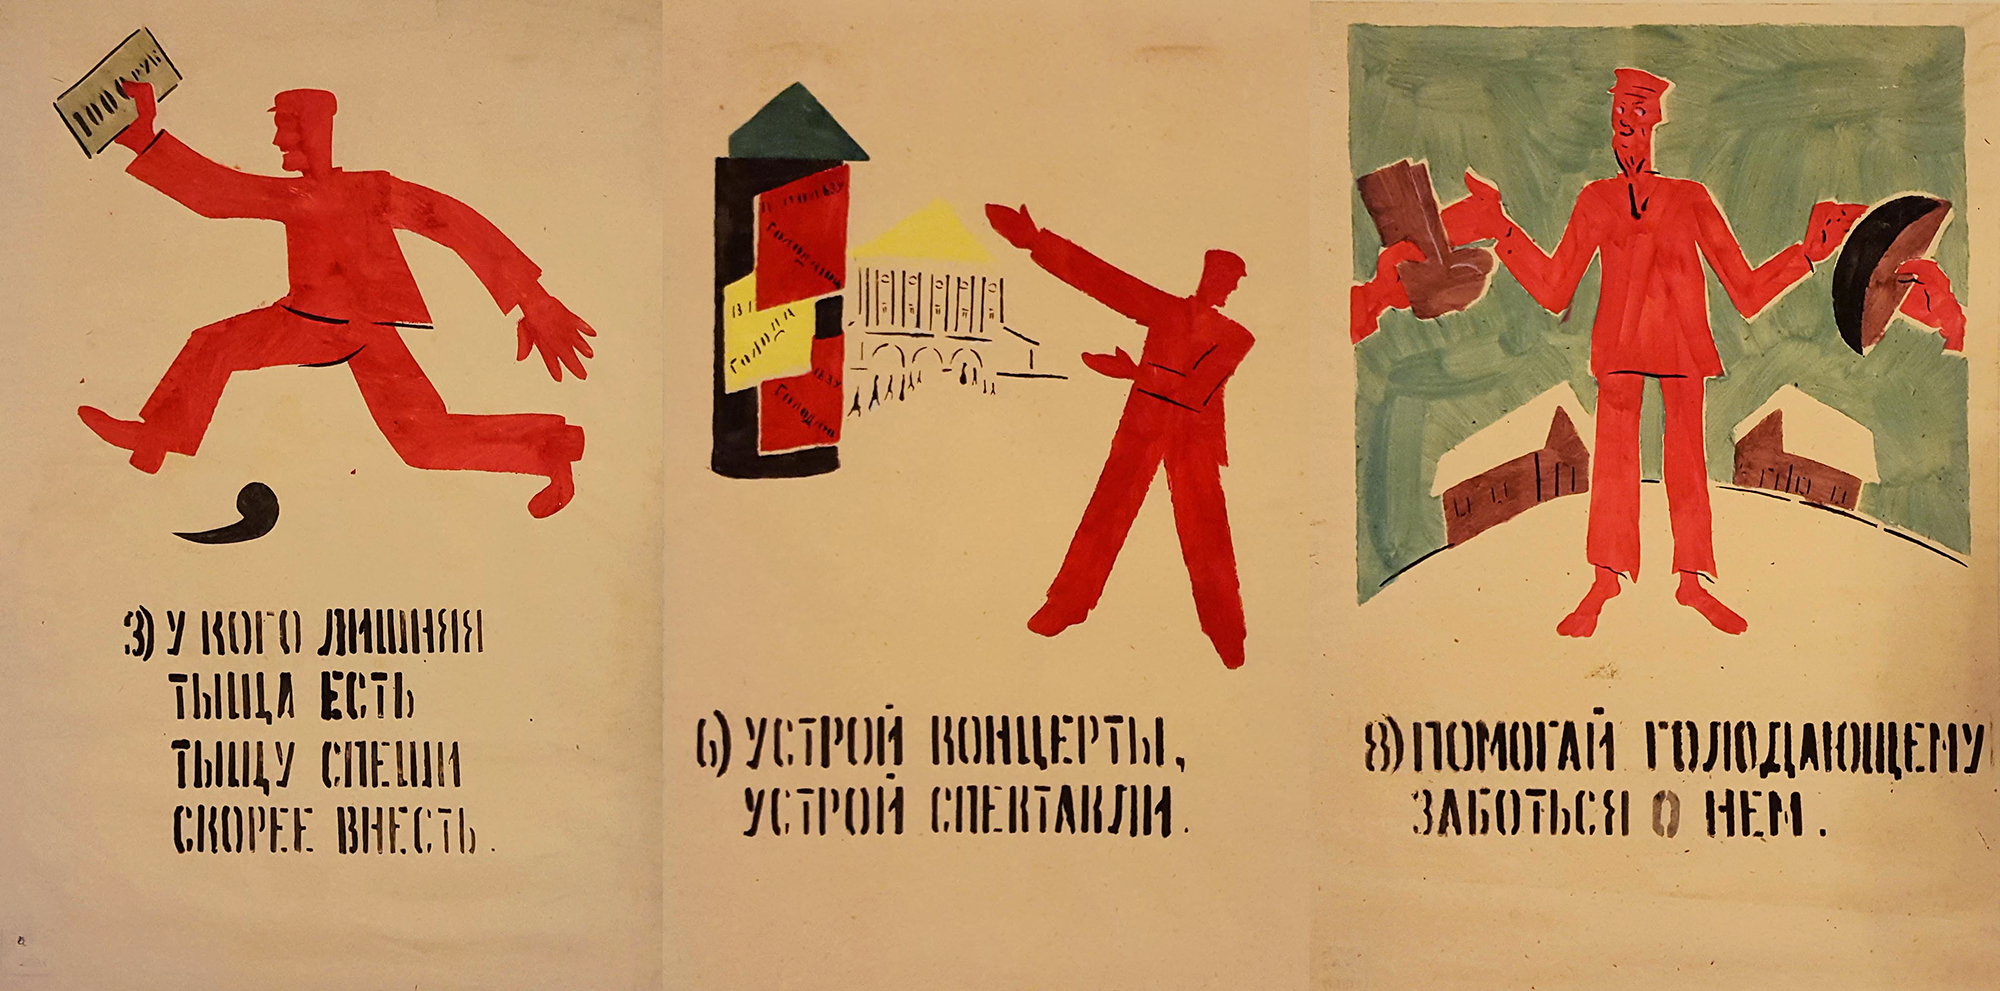 Маяковский рисовал плакаты. Плакаты Владимира Маяковского окна роста 1919-1922 г.г. Агитационные плакаты Маяковского в окнах роста. Окна роста Маяковский плакаты.